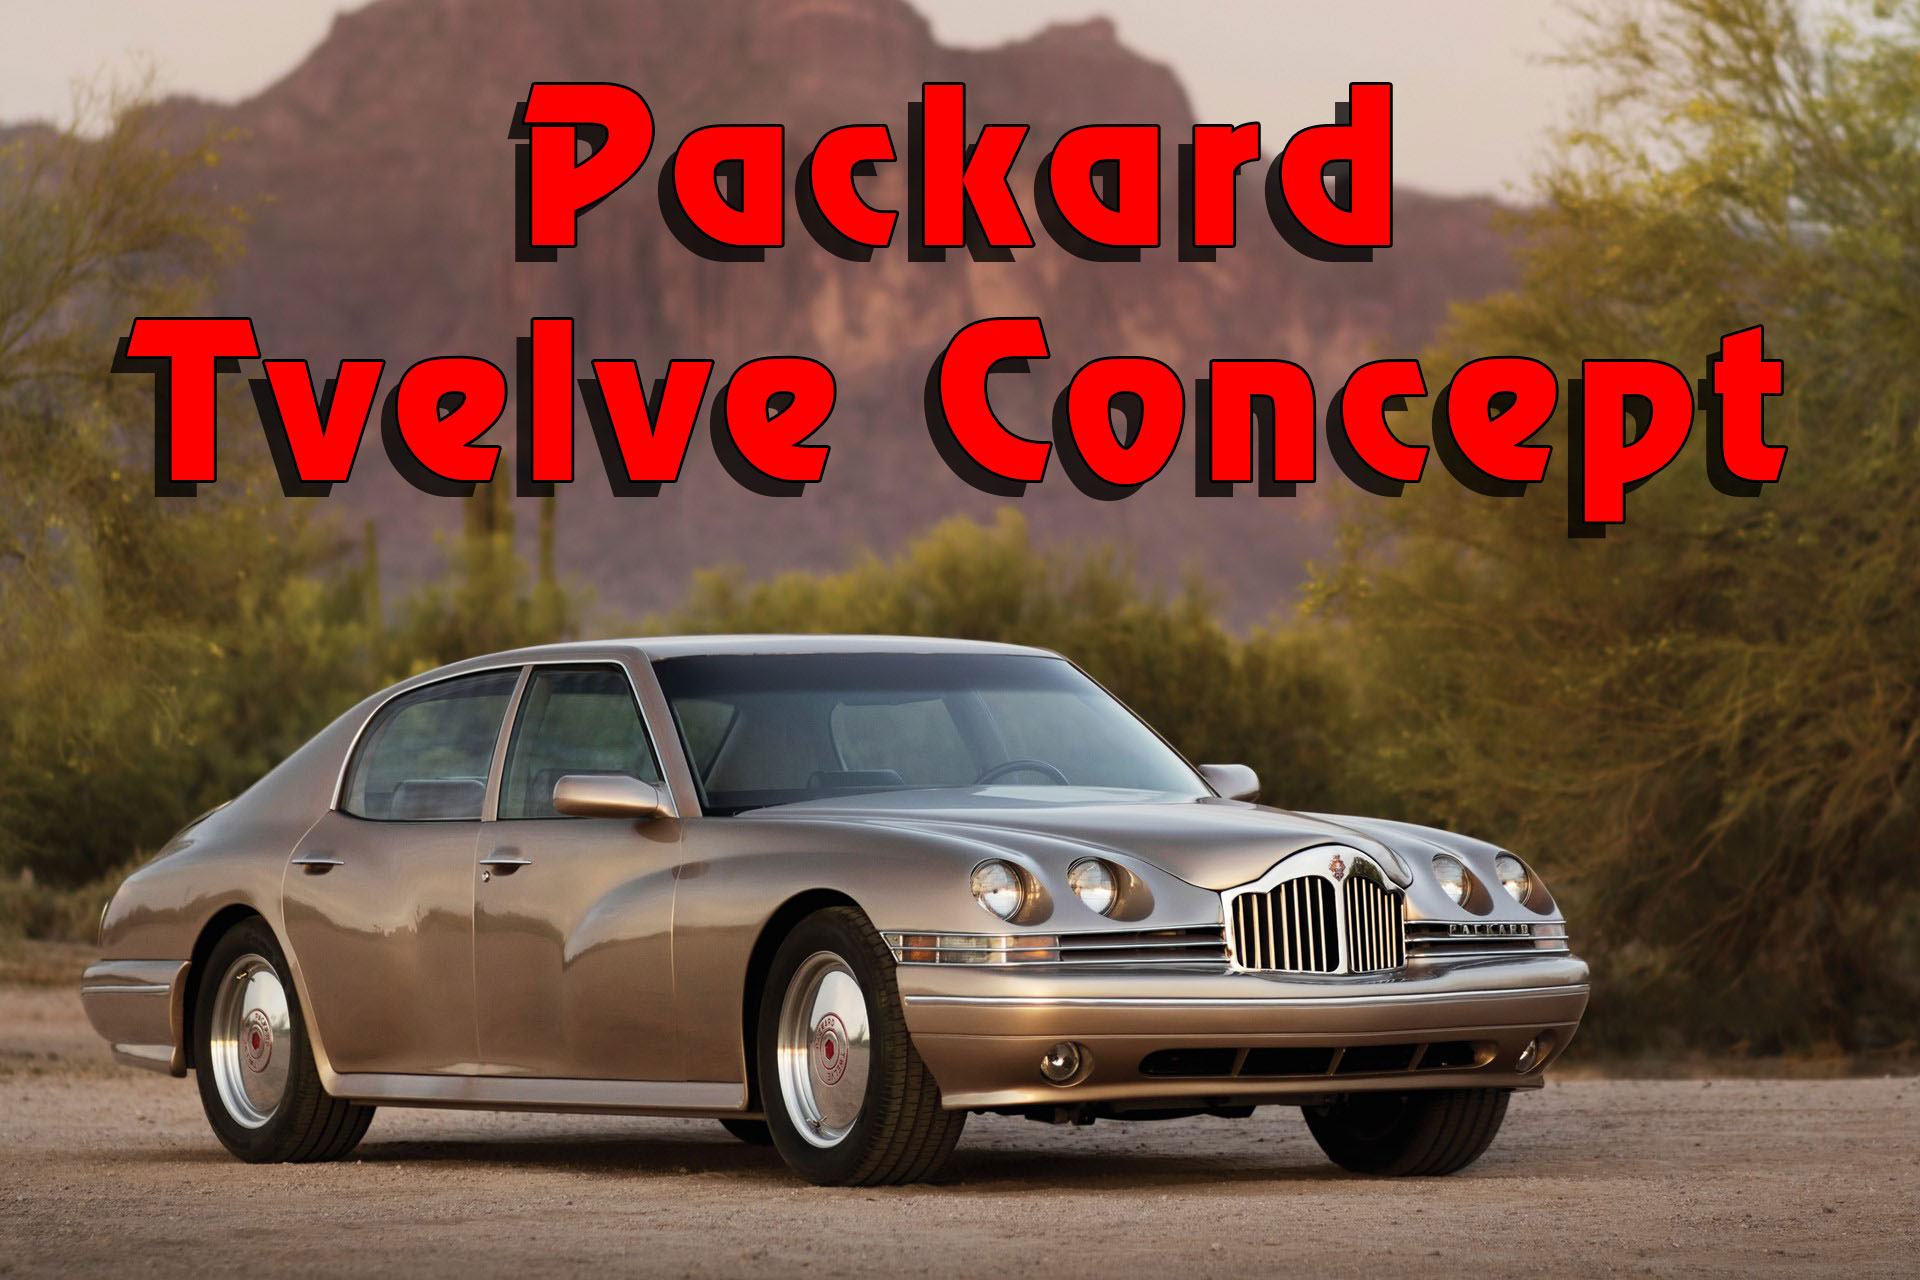 Amerykański koncept retrolimuzyny czyli Packard Tvelve Concept